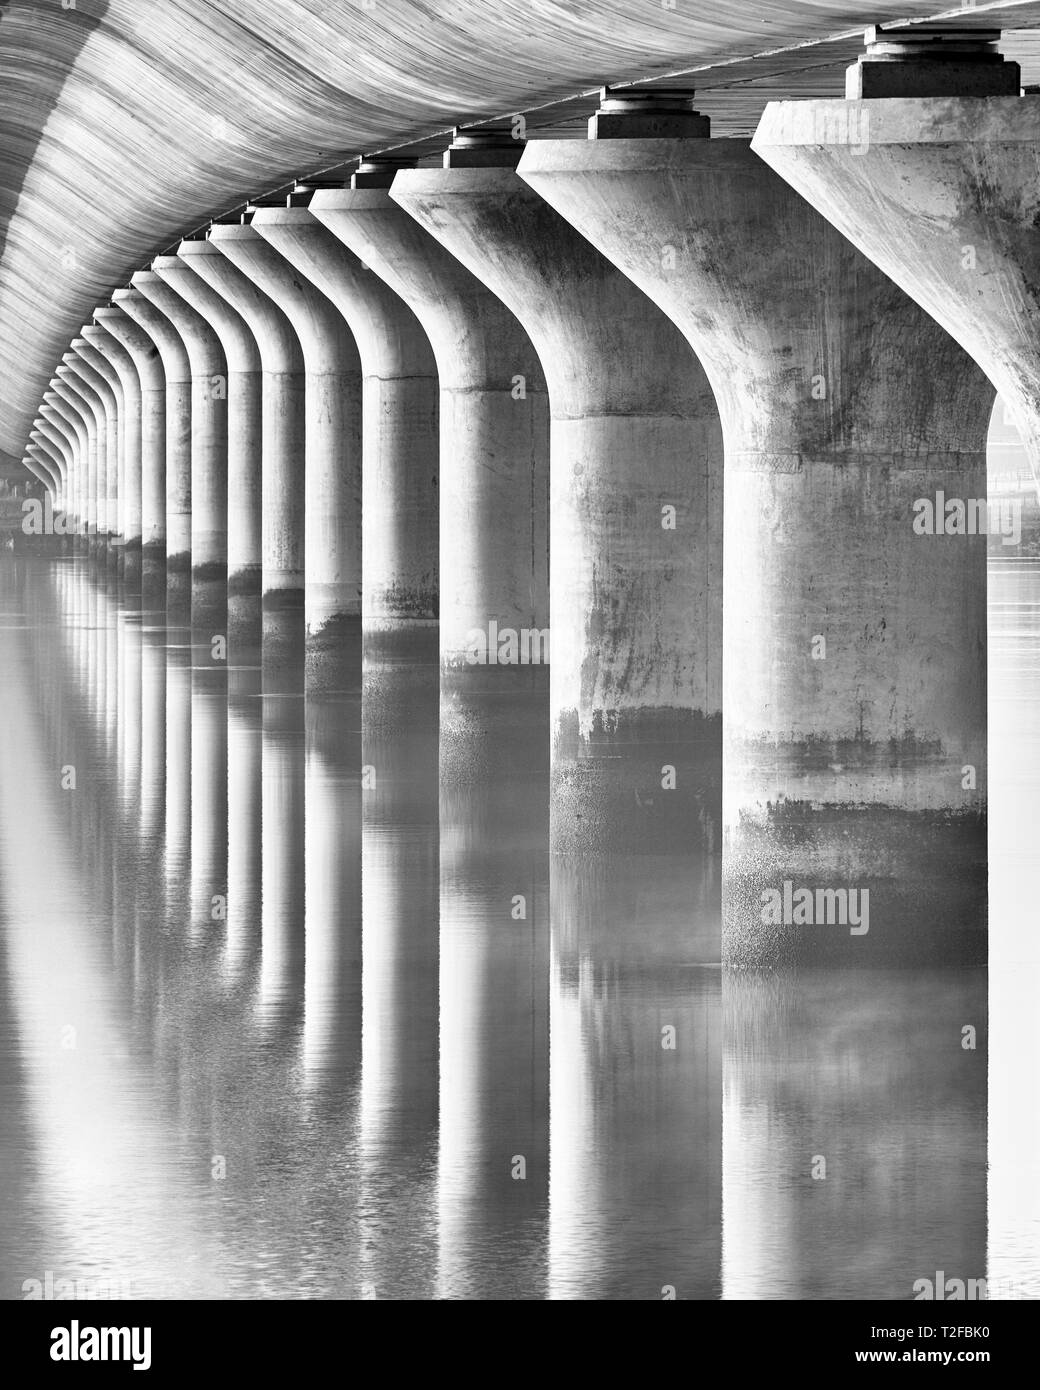 Clackmannanshire Bridge.  Black and White image of the underside of the bridge.  Scotland. Stock Photo